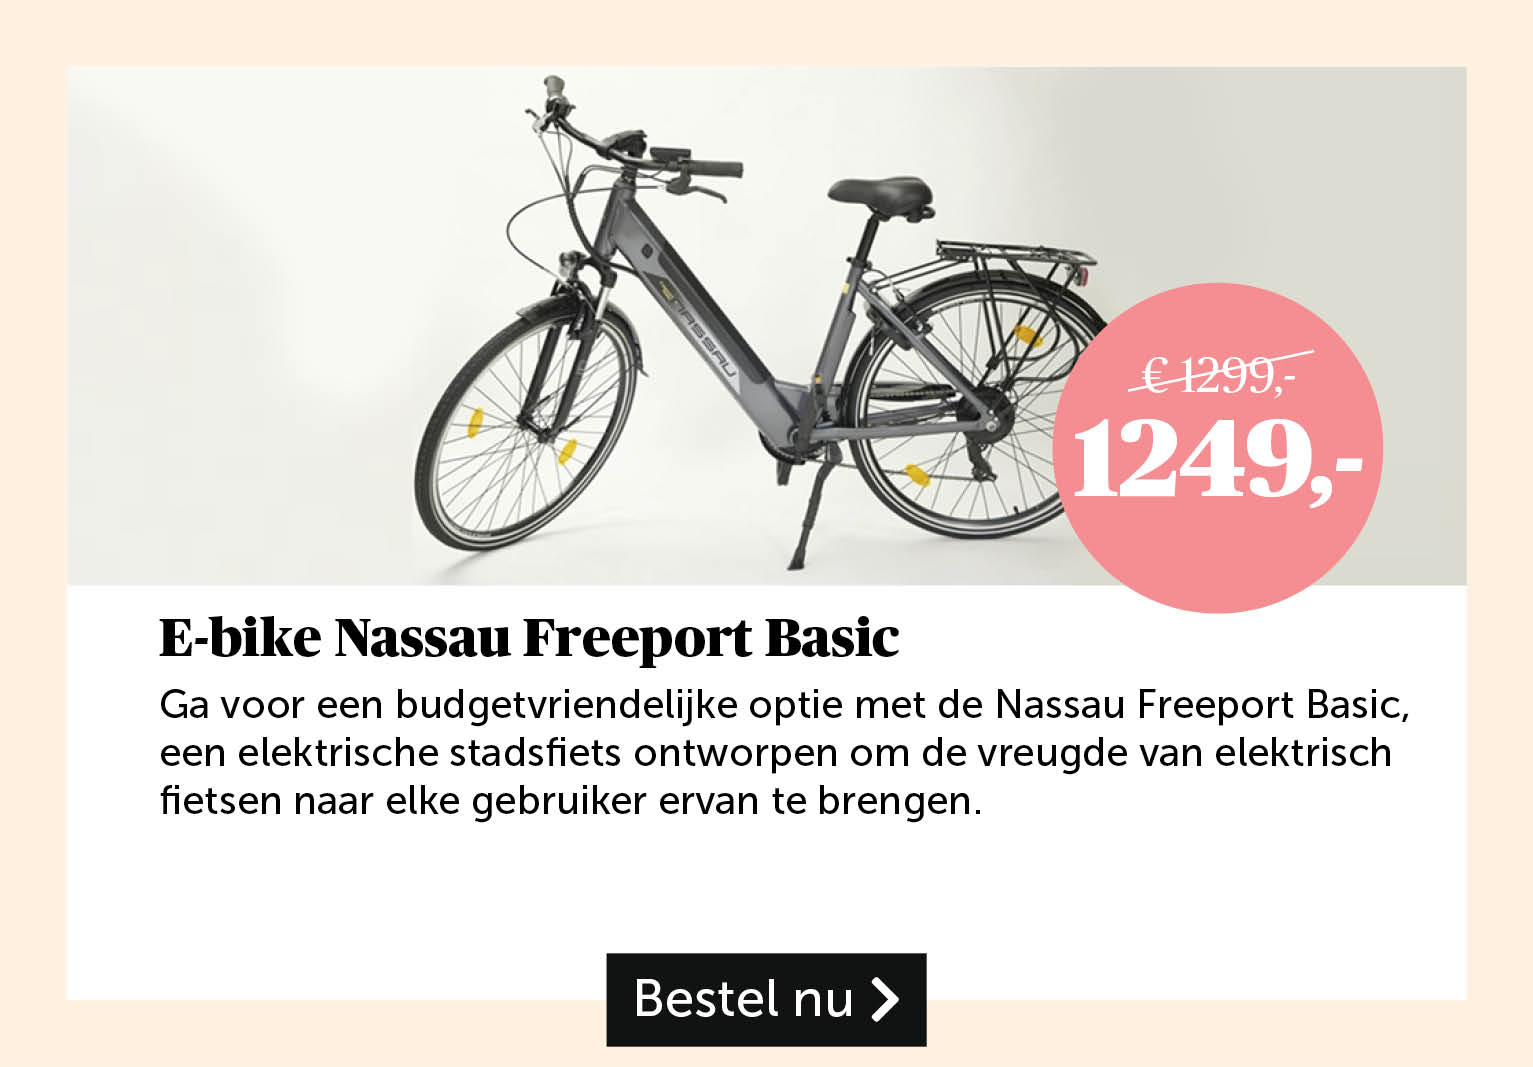 E-bike Nassau Freeport Basic